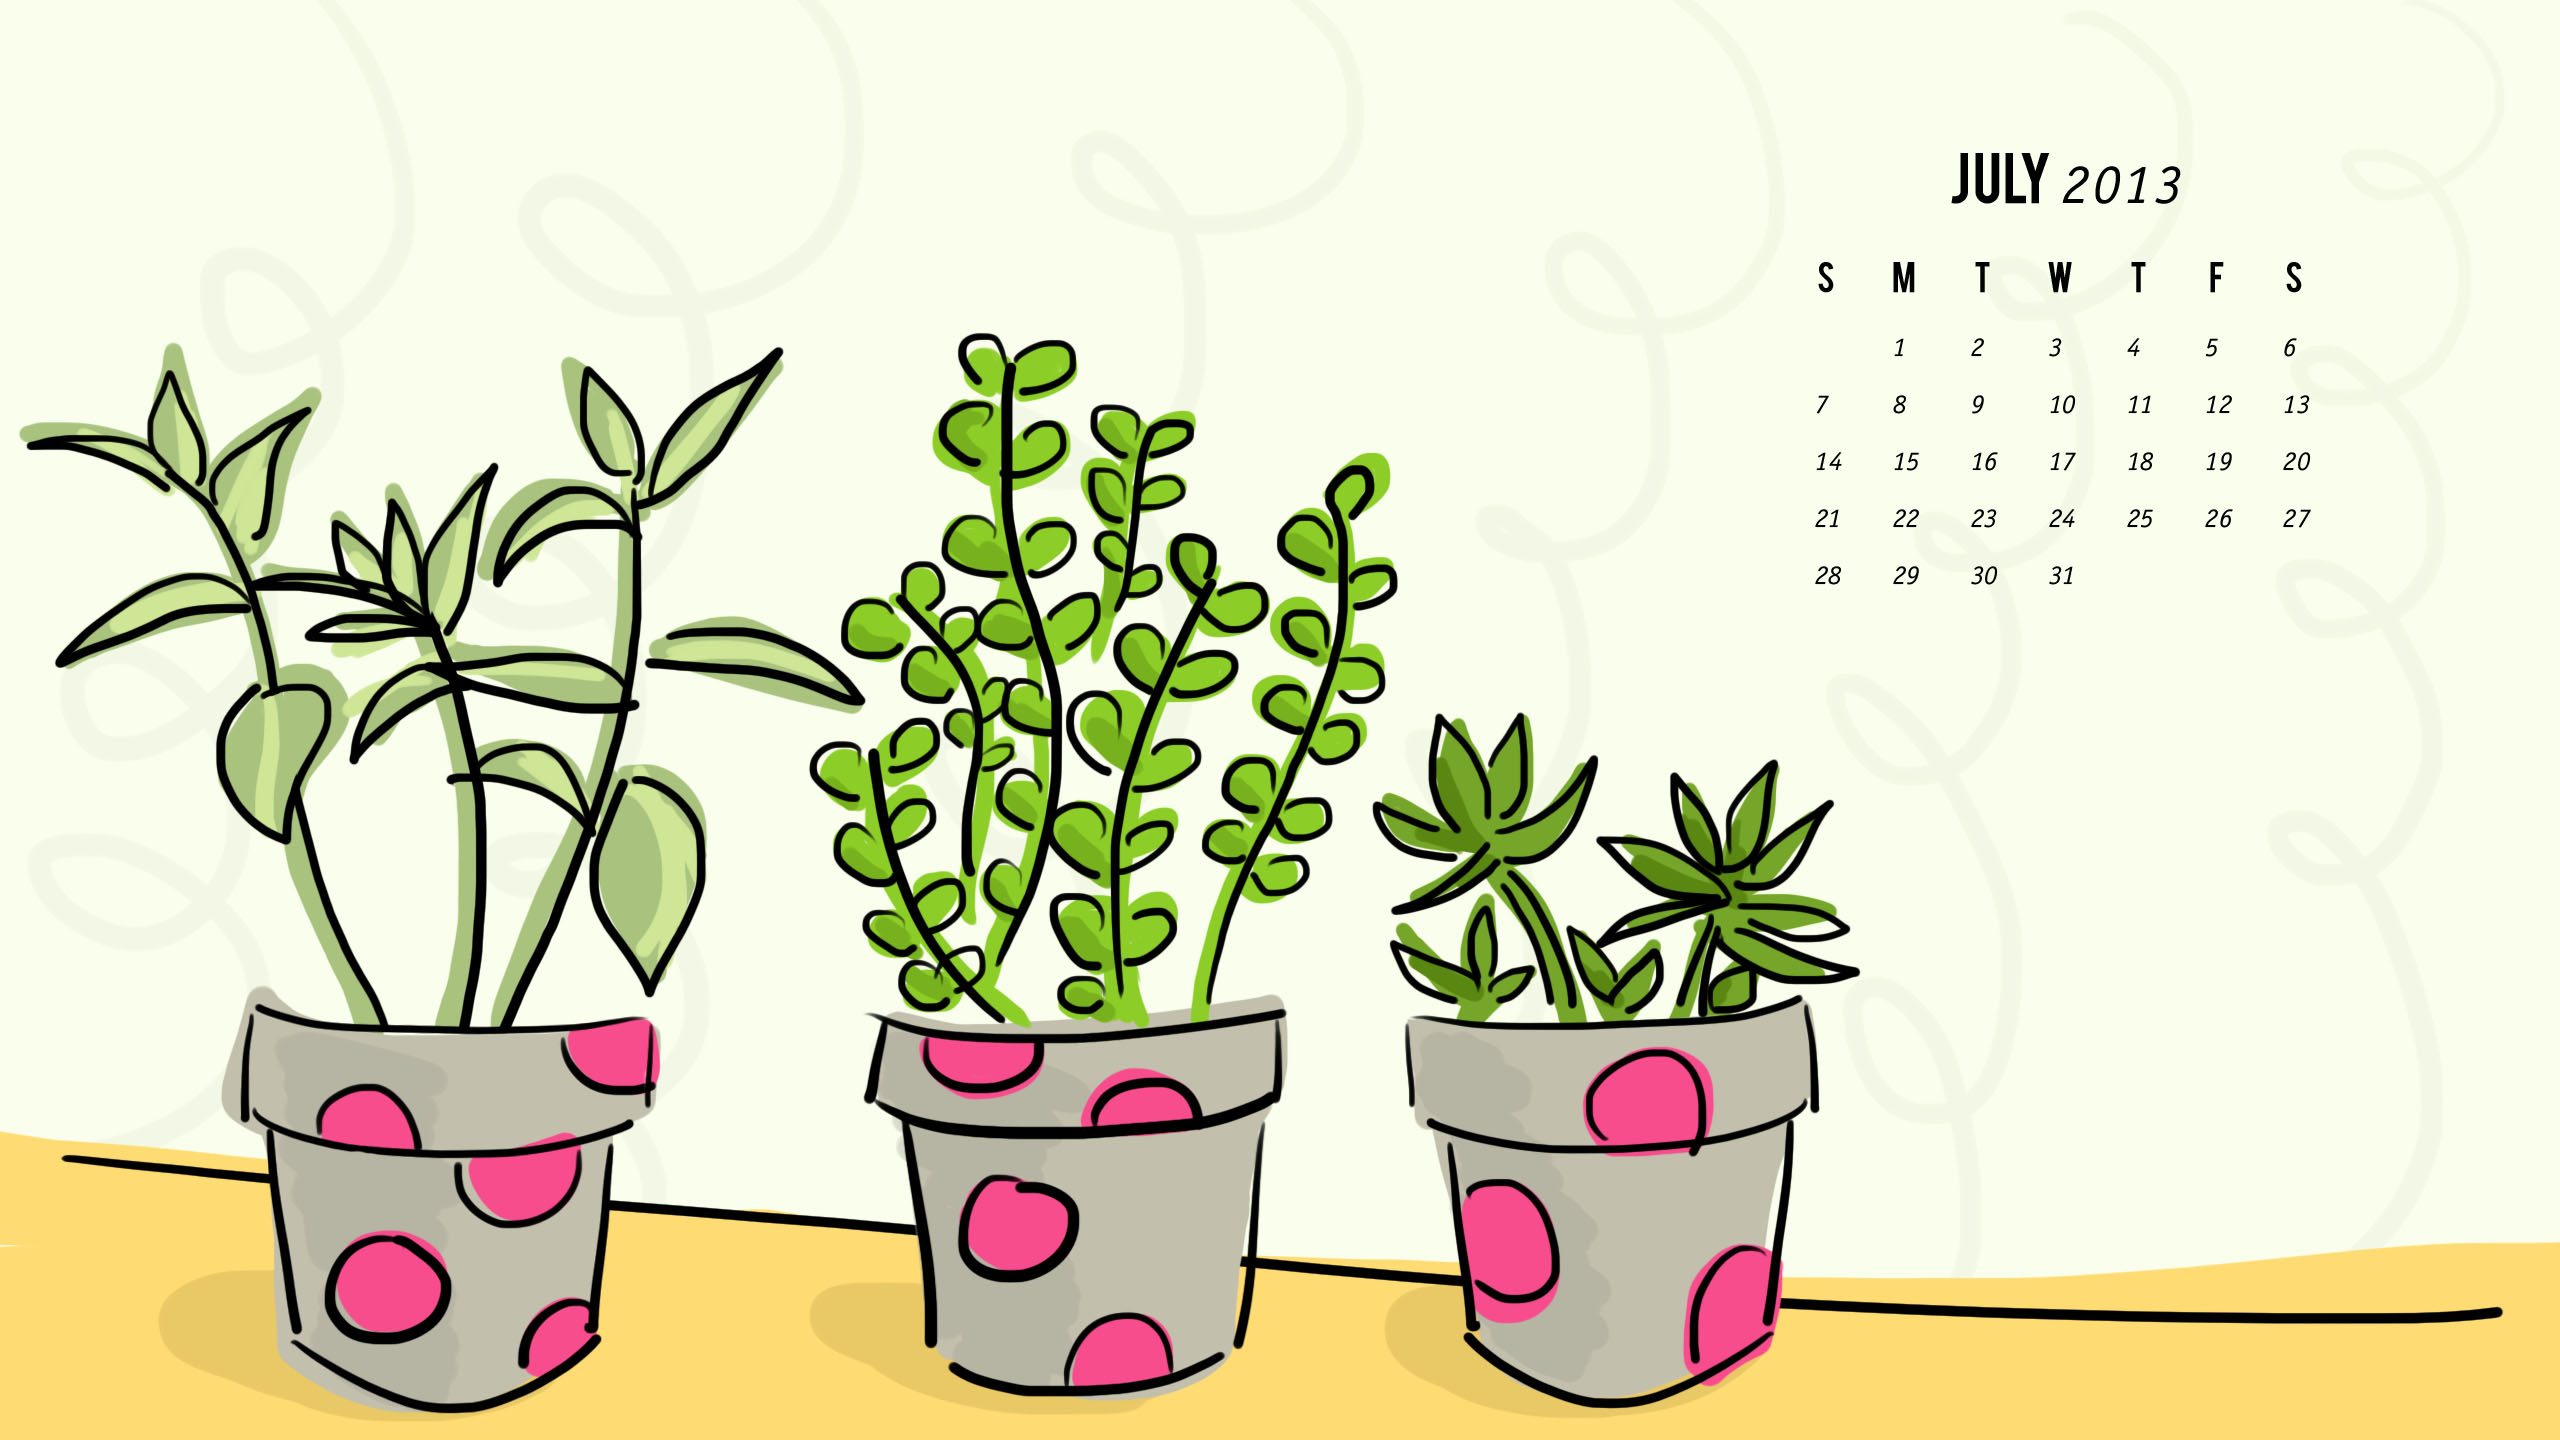 July 2013 Succulent Calendar Wallpaper by Sarah Hearts 2560x1440